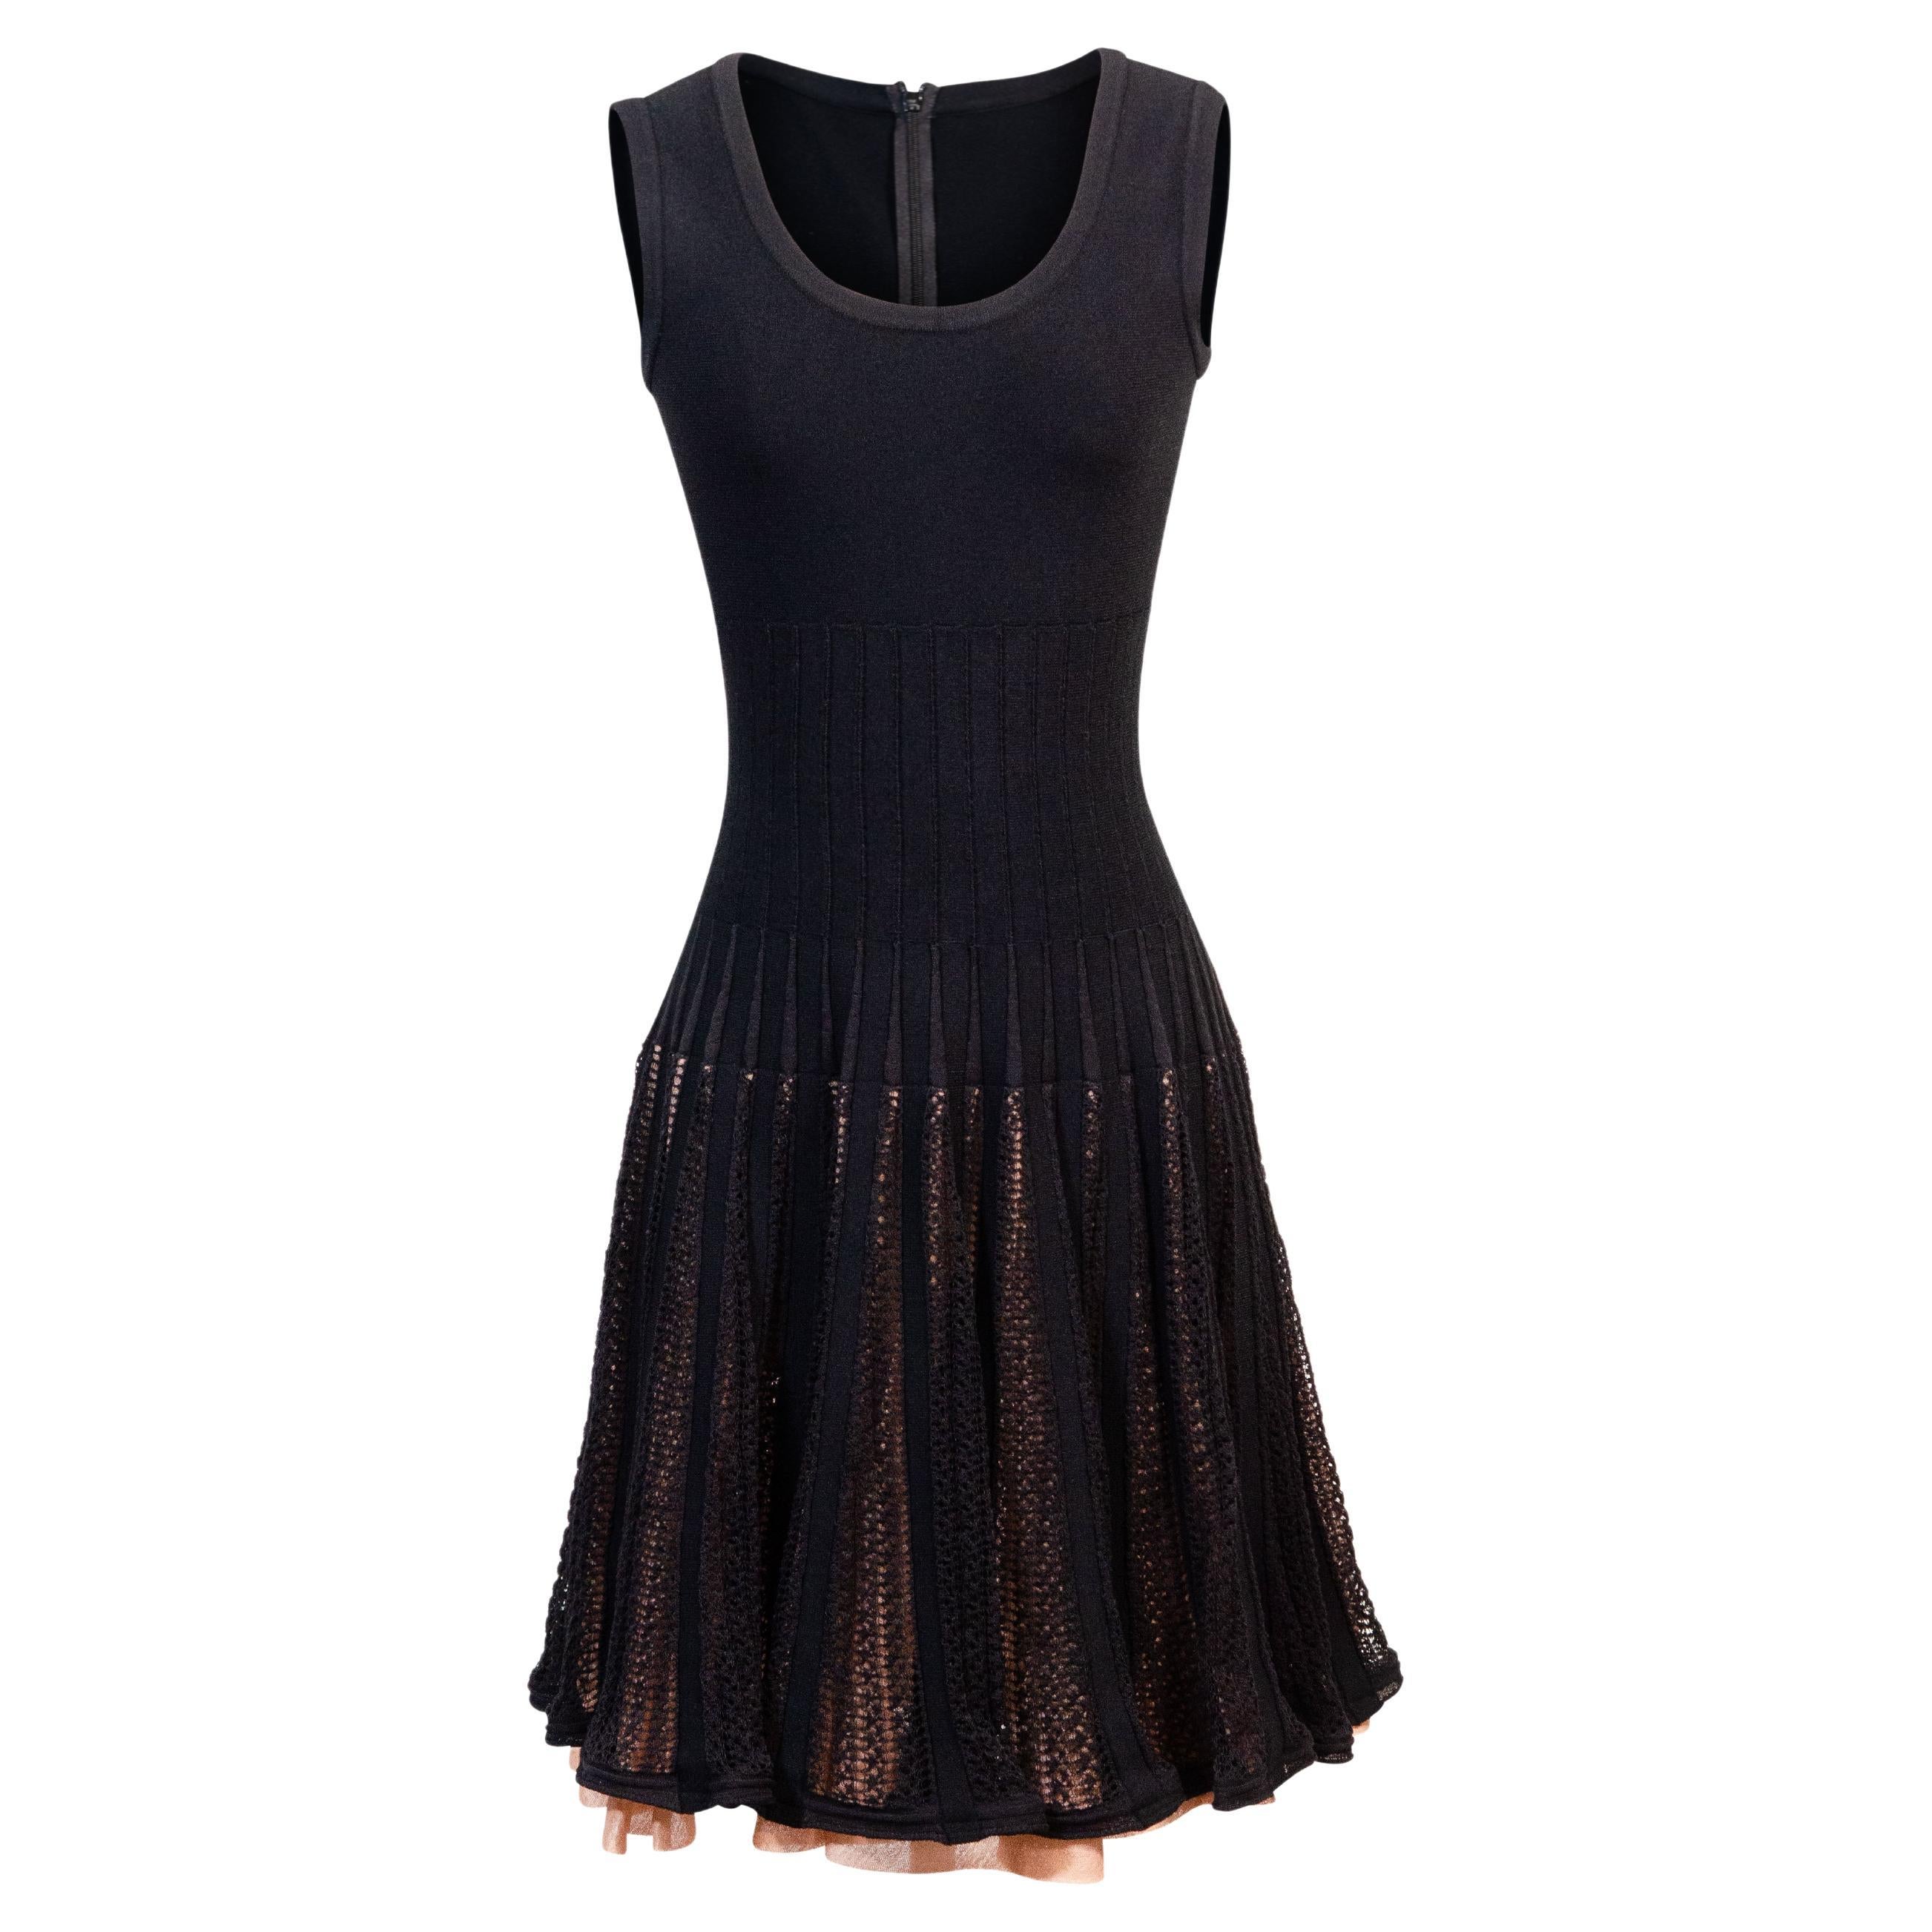 ALAÏA Contemporary knit dress black with peach toned lining / underlay